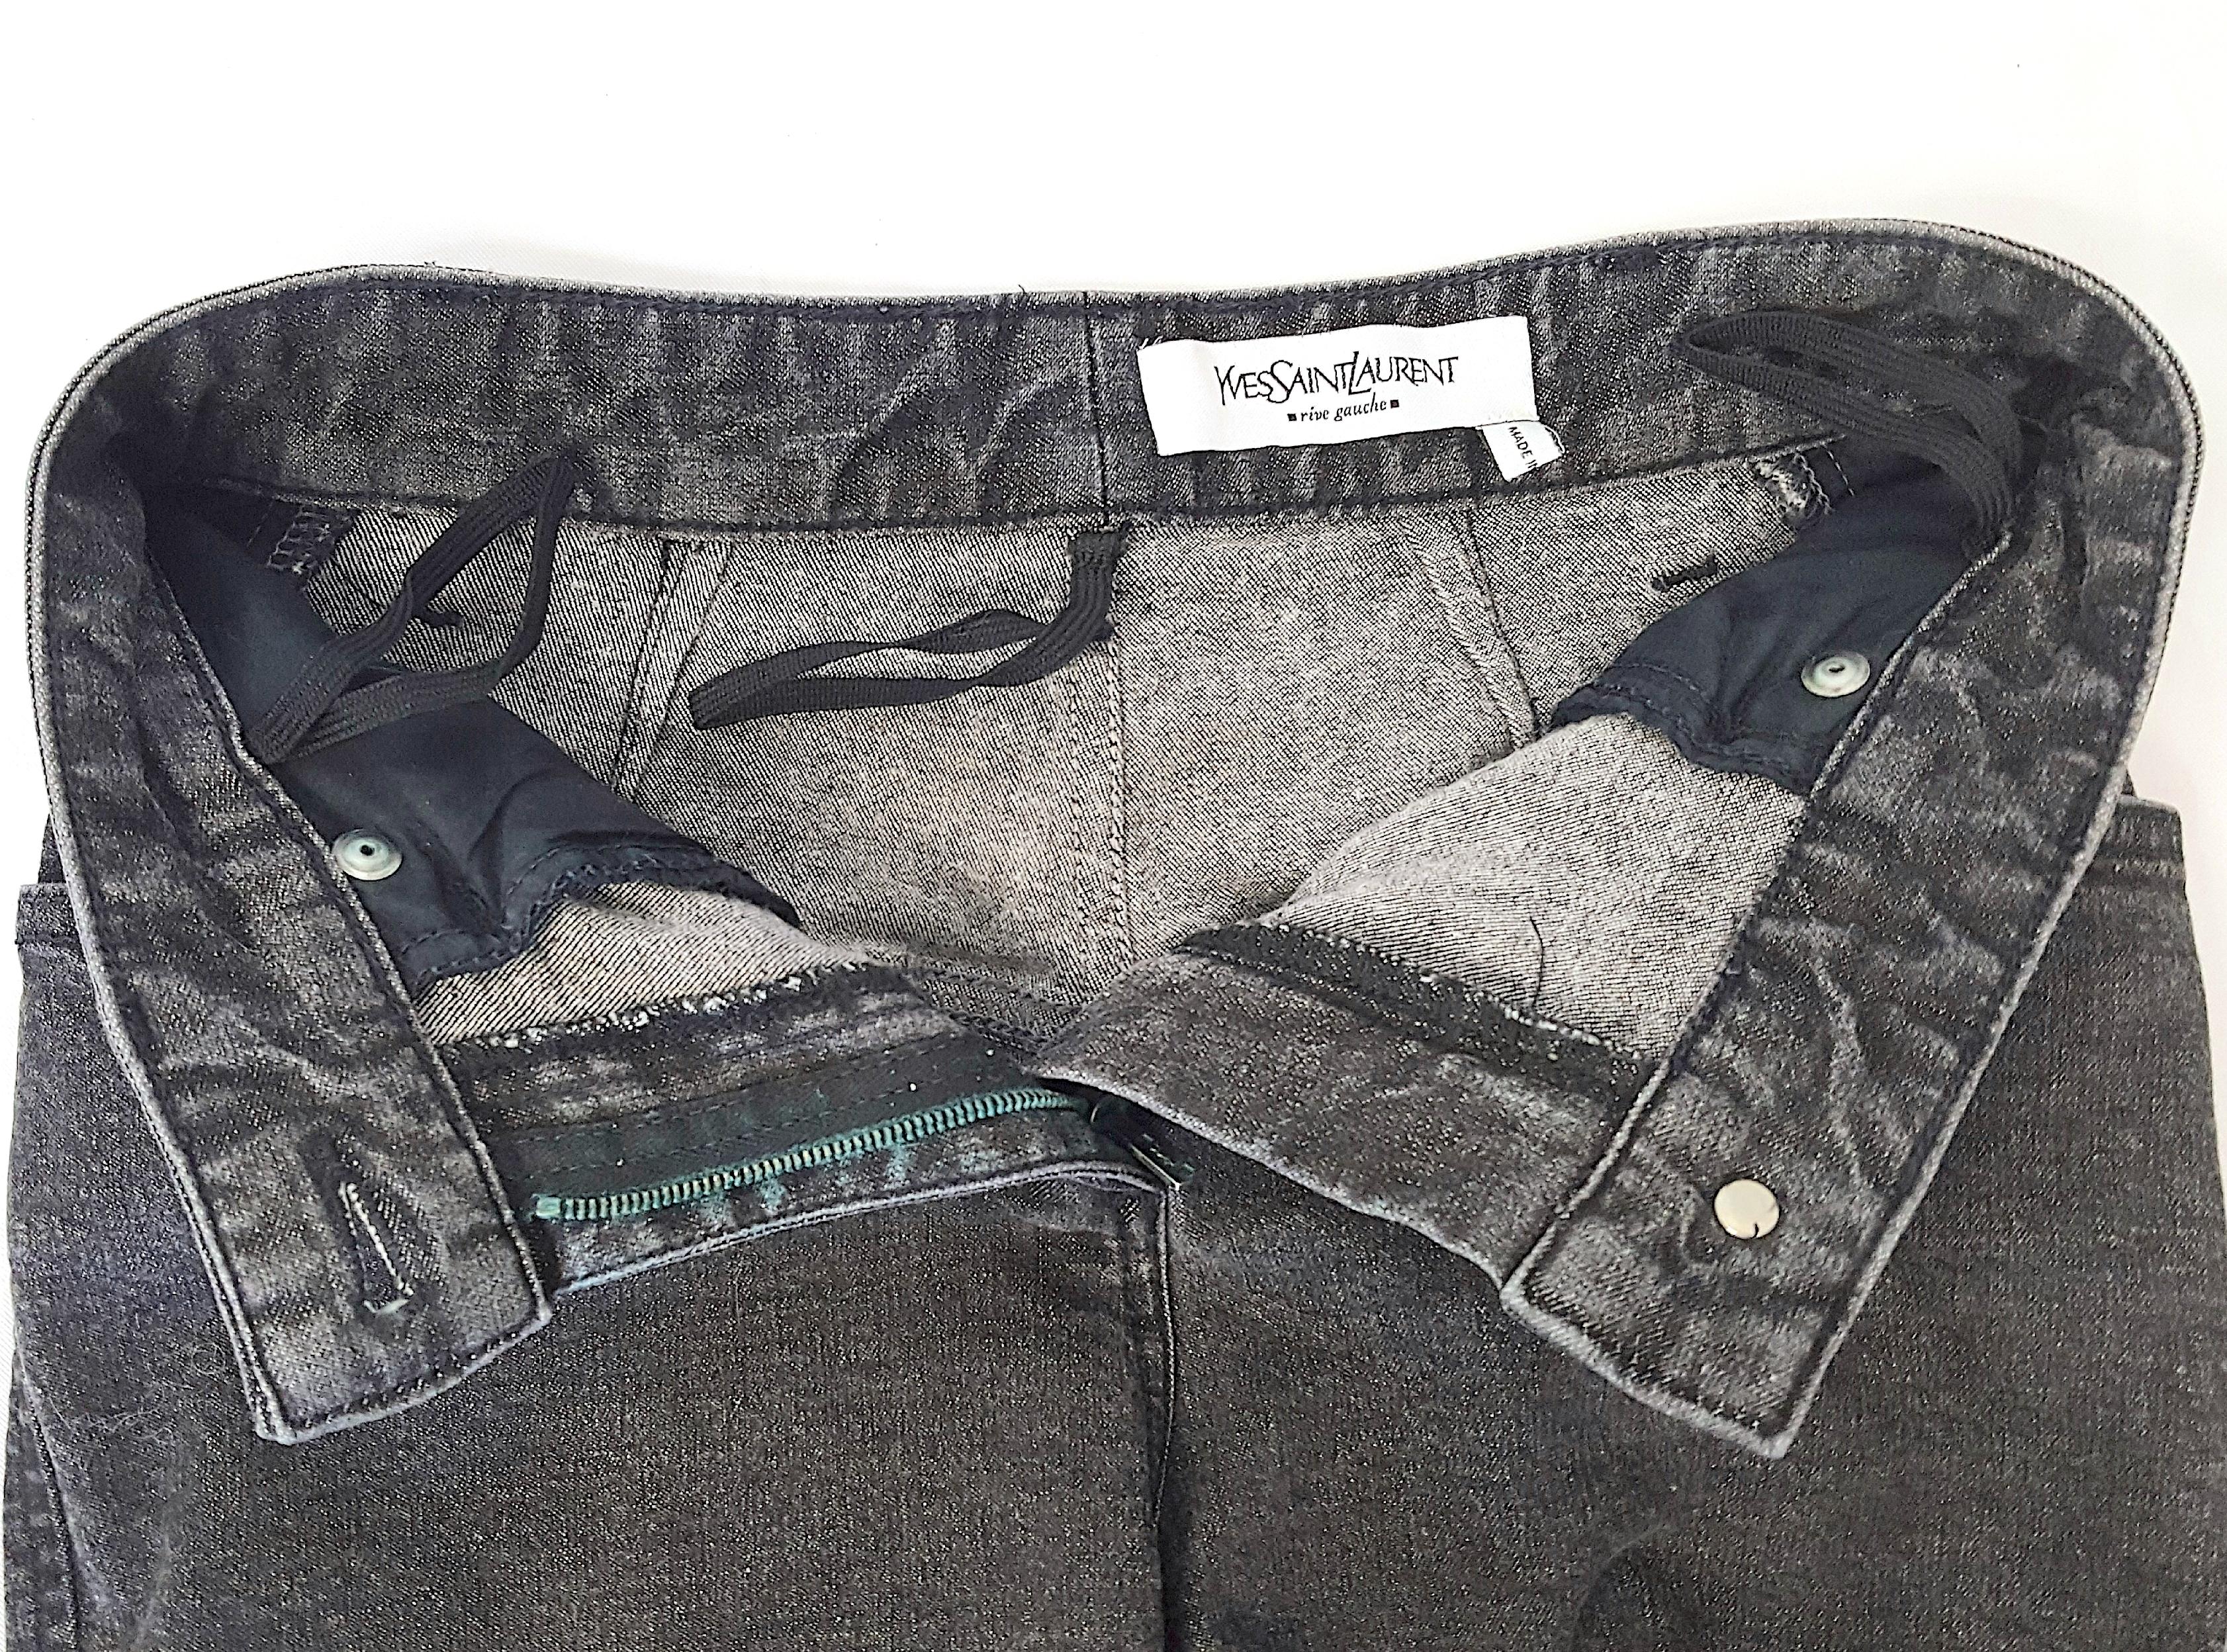 TomFord For YvesSaintLaurent RiveGauche Slim StraightLeg Black FineDenim Jeans In Good Condition For Sale In Chicago, IL